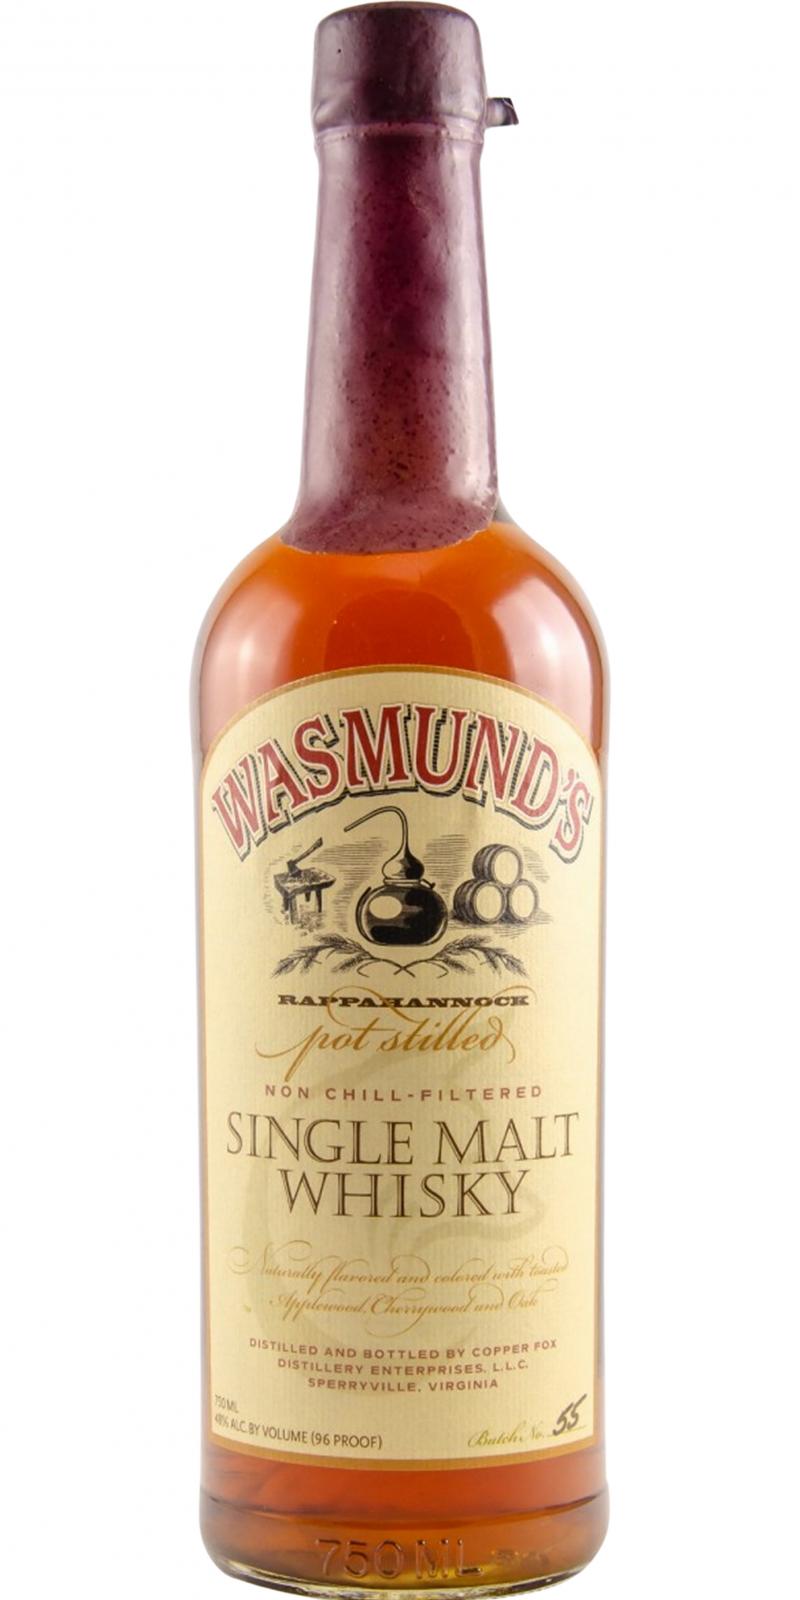 Wasmund's Single Malt Whisky Batch 55 48% 750ml